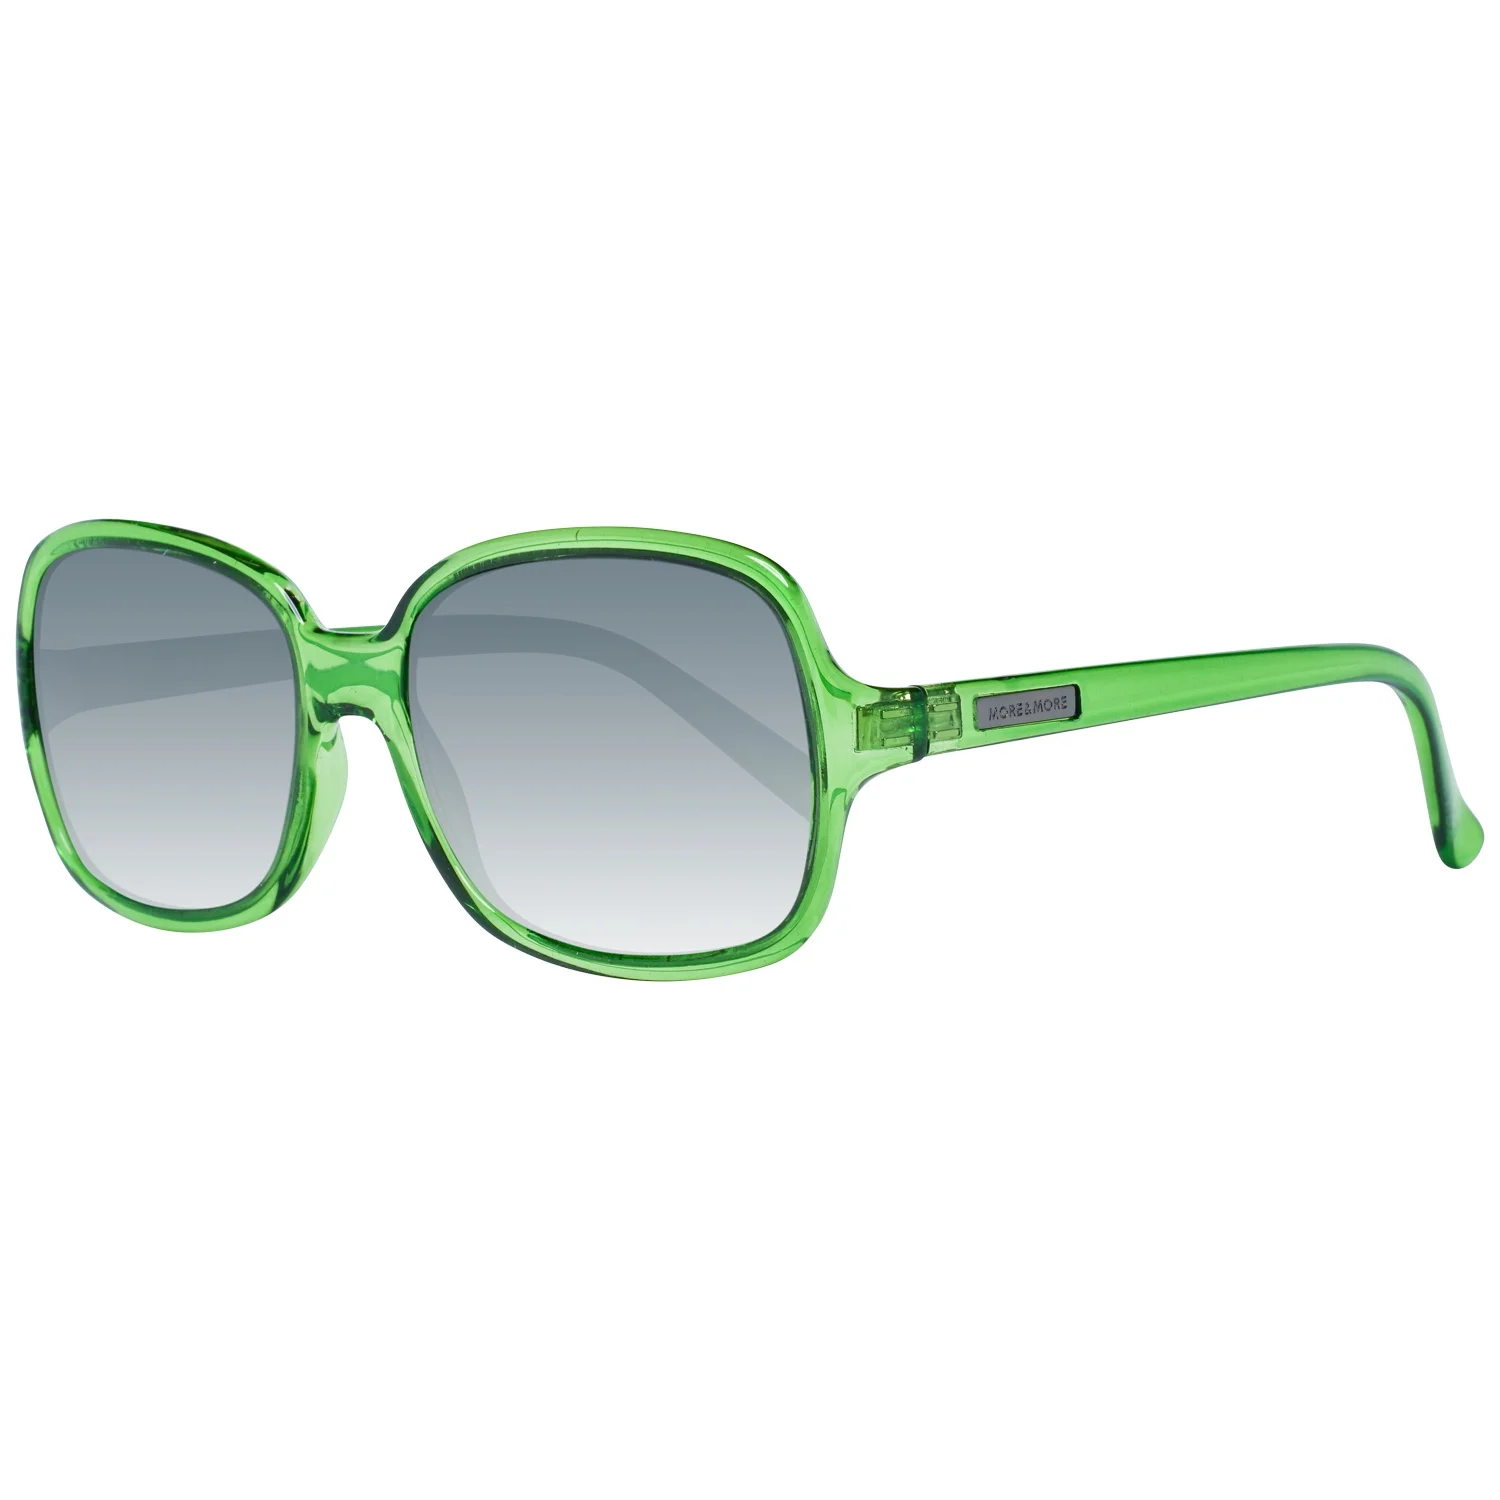 More more sunglasses. A+more очки. Очки more and more женские. Очки more and more женские 54809. Очки more and more зеленые.